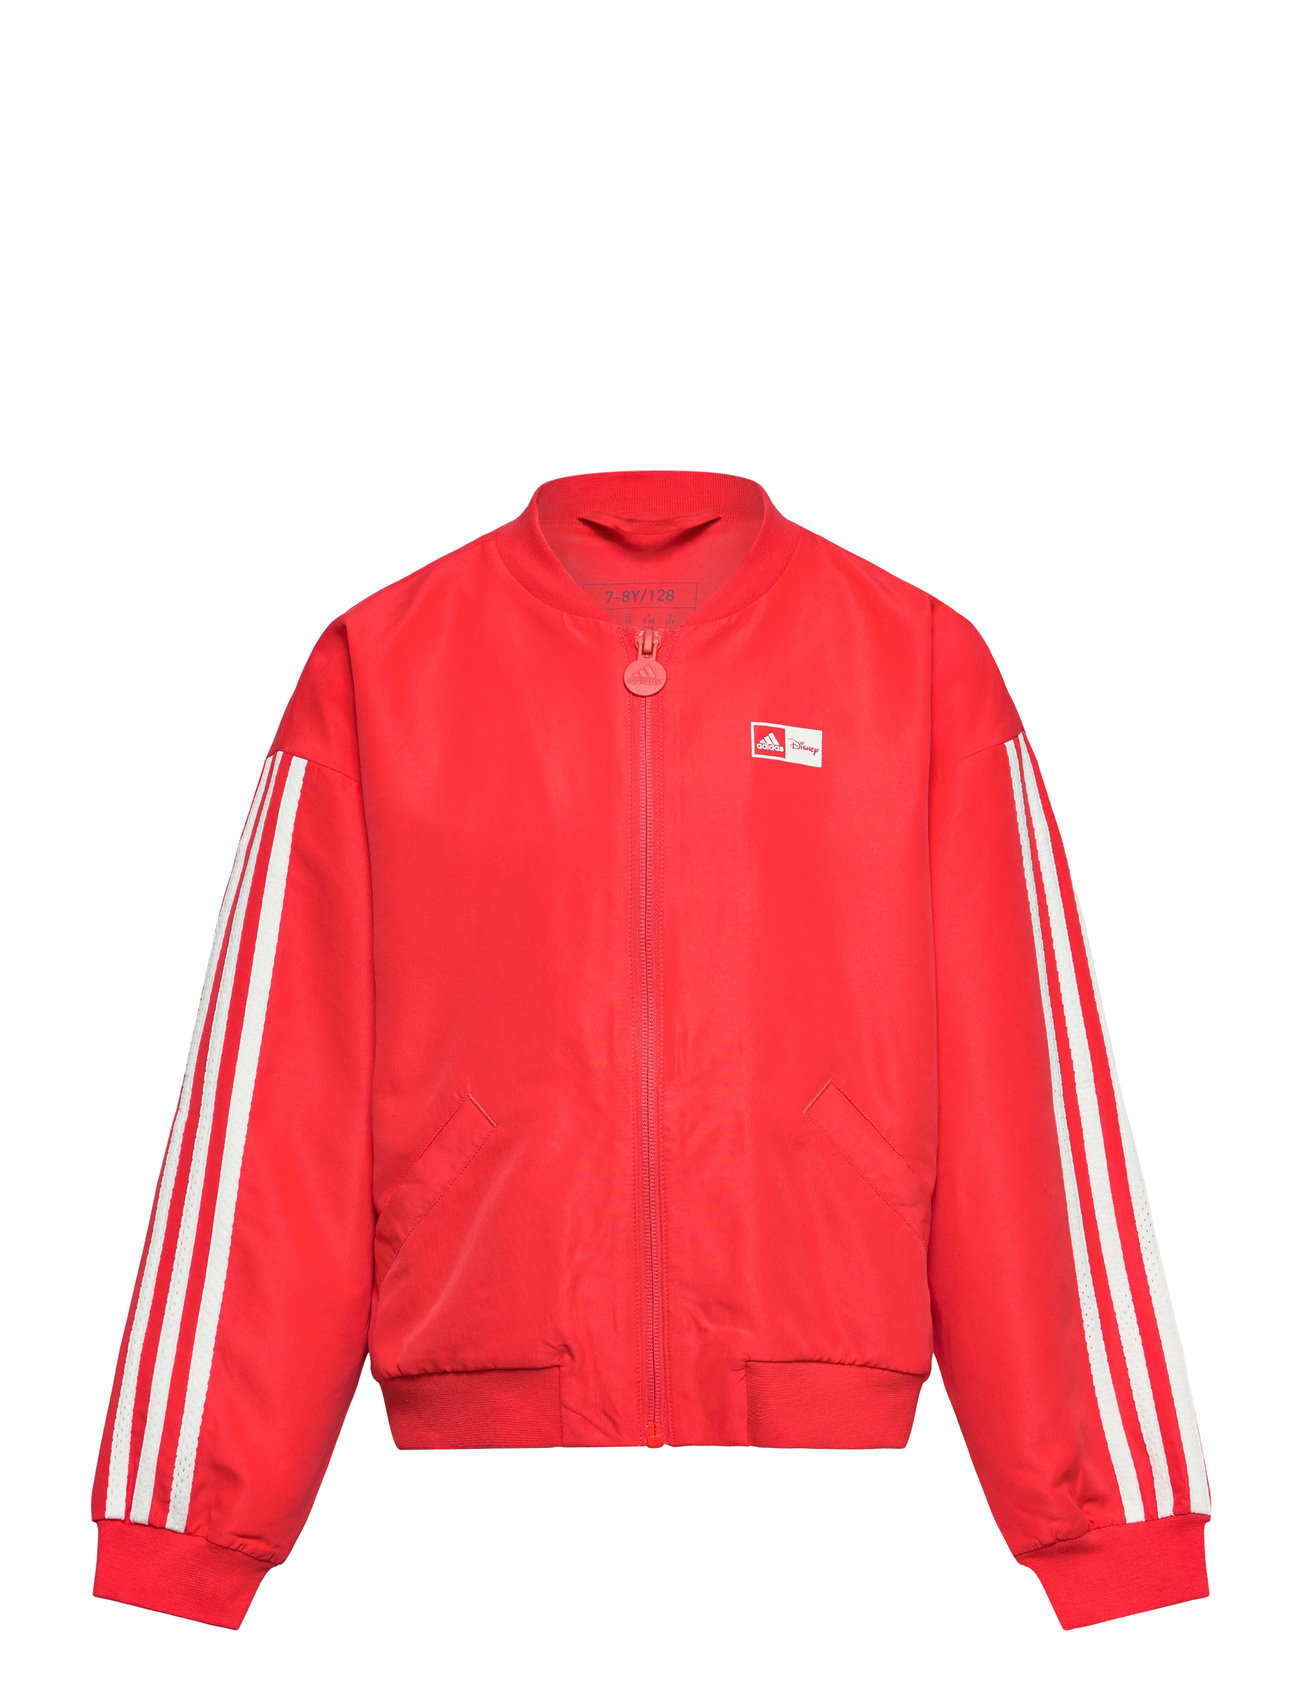 Lk Dy Mm Wb Sport Jackets & Coats Windbreaker Red Adidas Performance